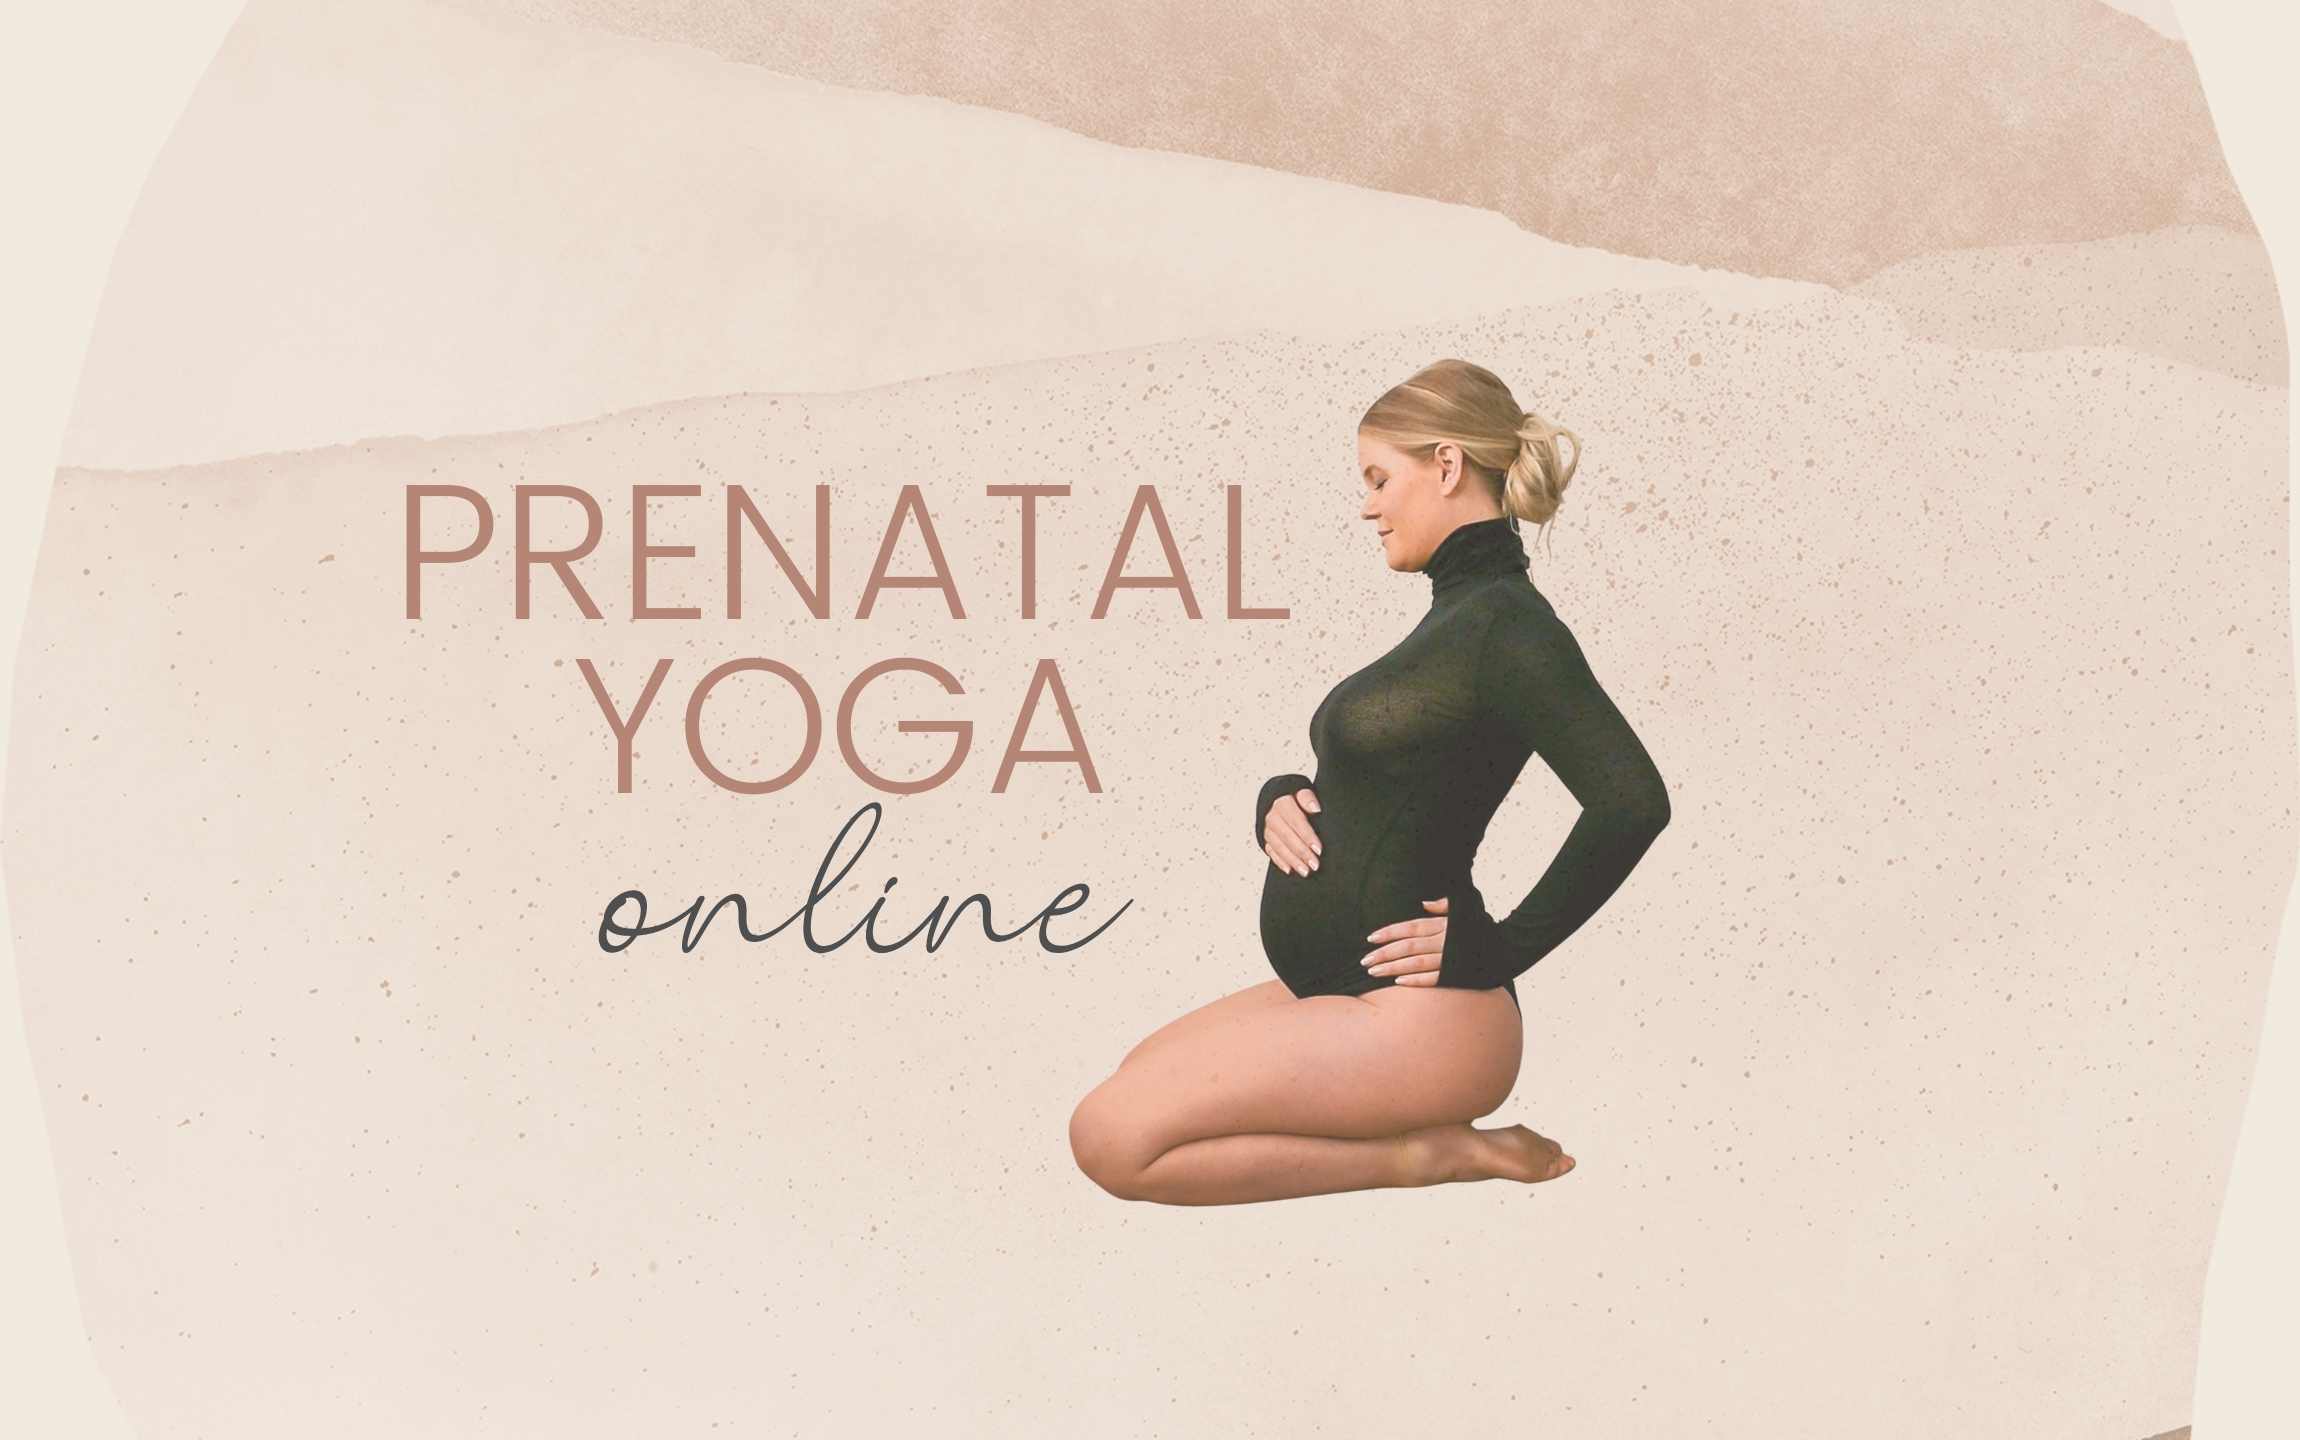 Prenatal Yoga Online by Yoga Raccoon